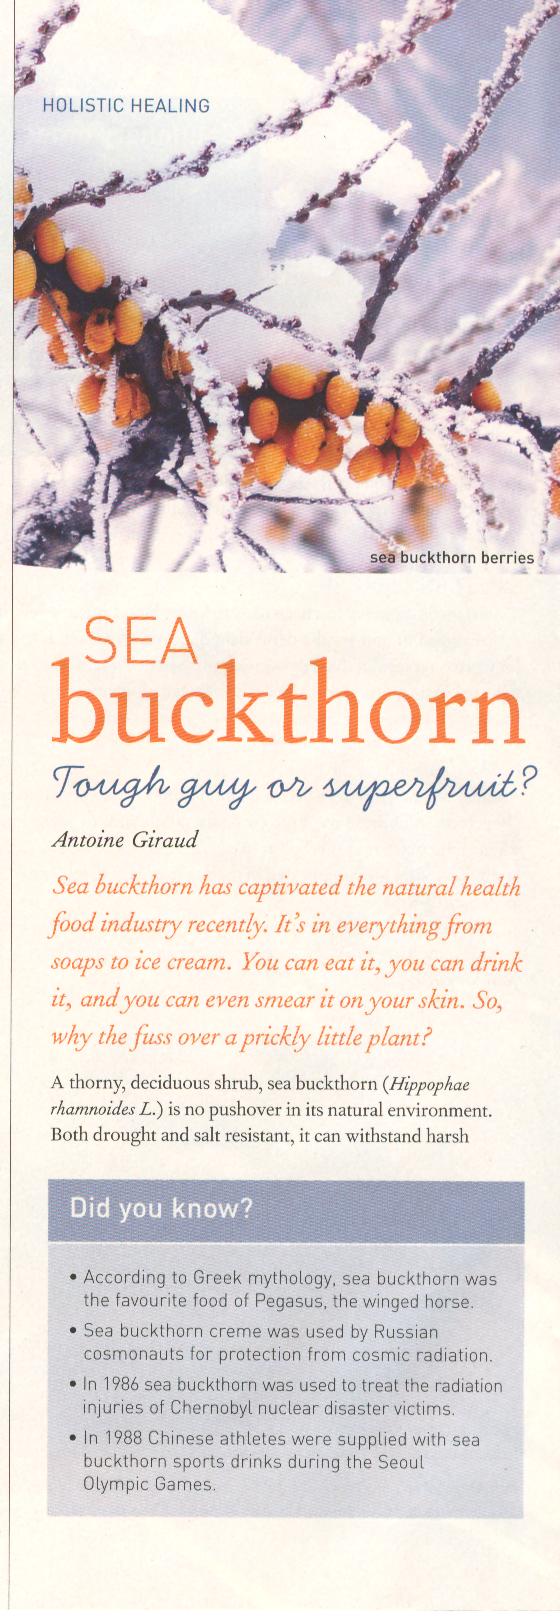 Seabuckthorn